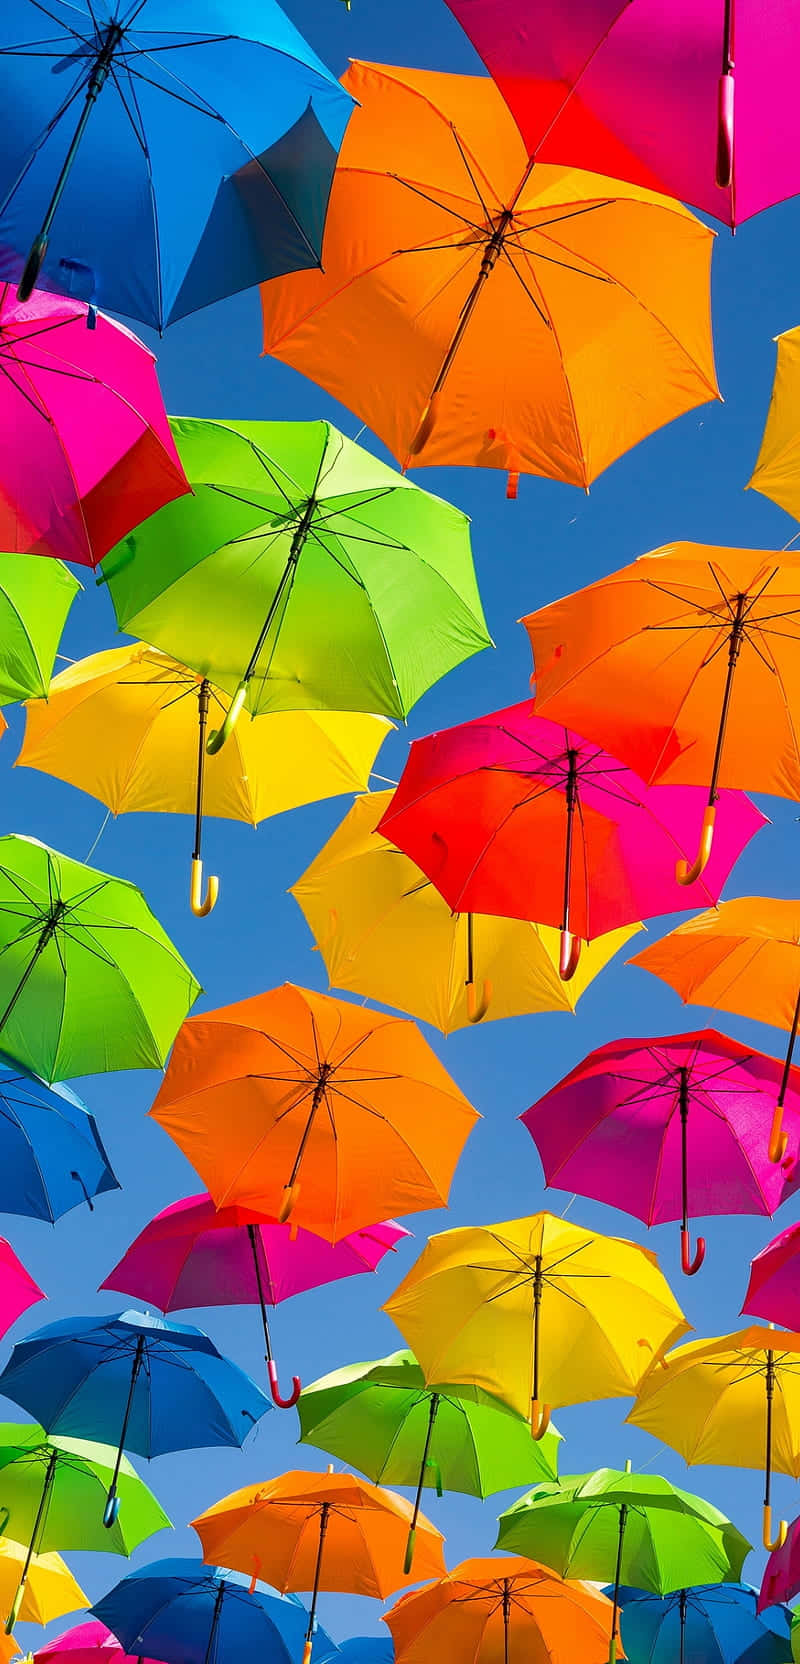 Colorful Umbrella Canopy Sky